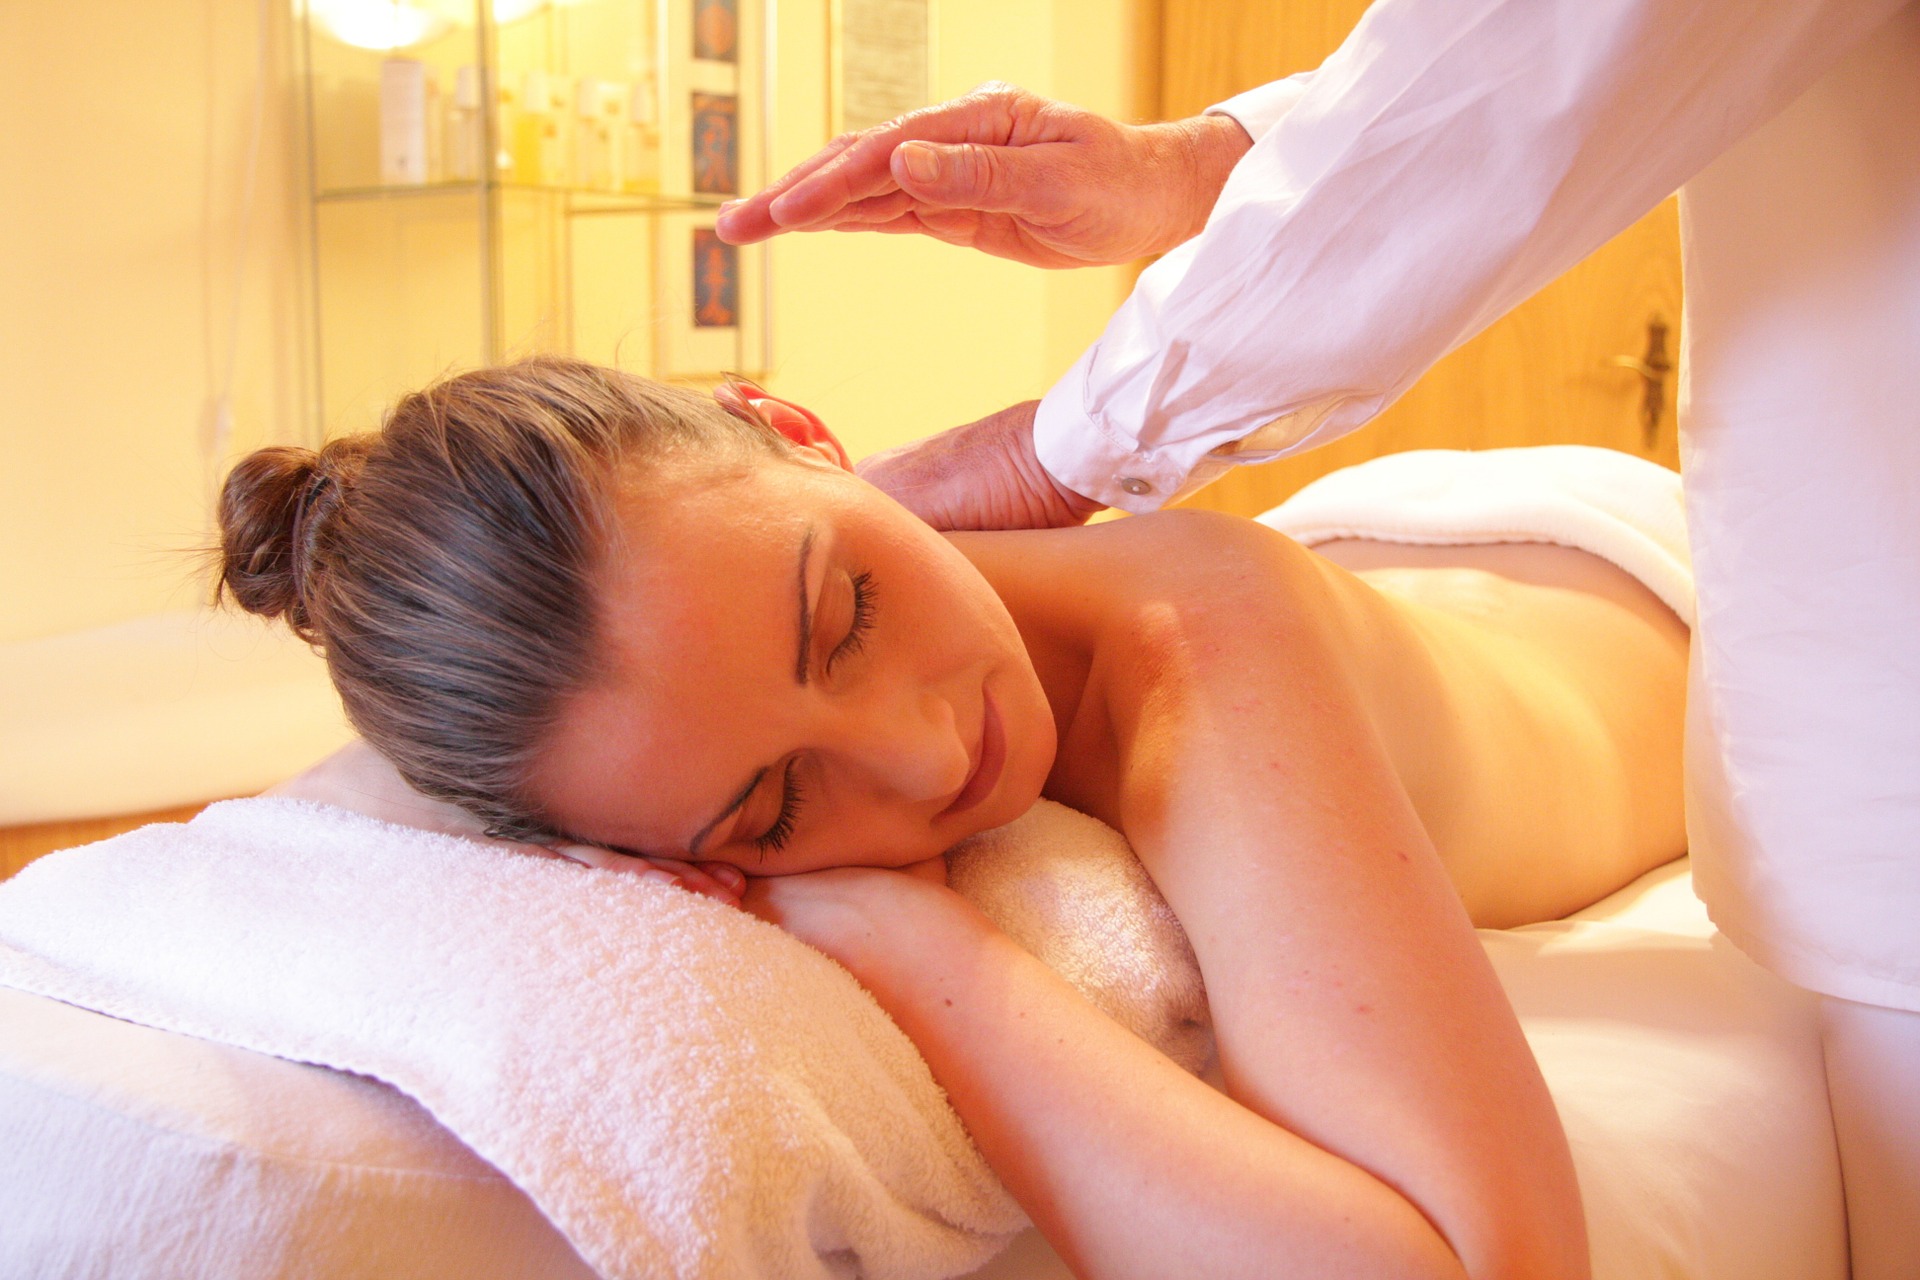 cordaro hargrove recommends nuru massage for women pic